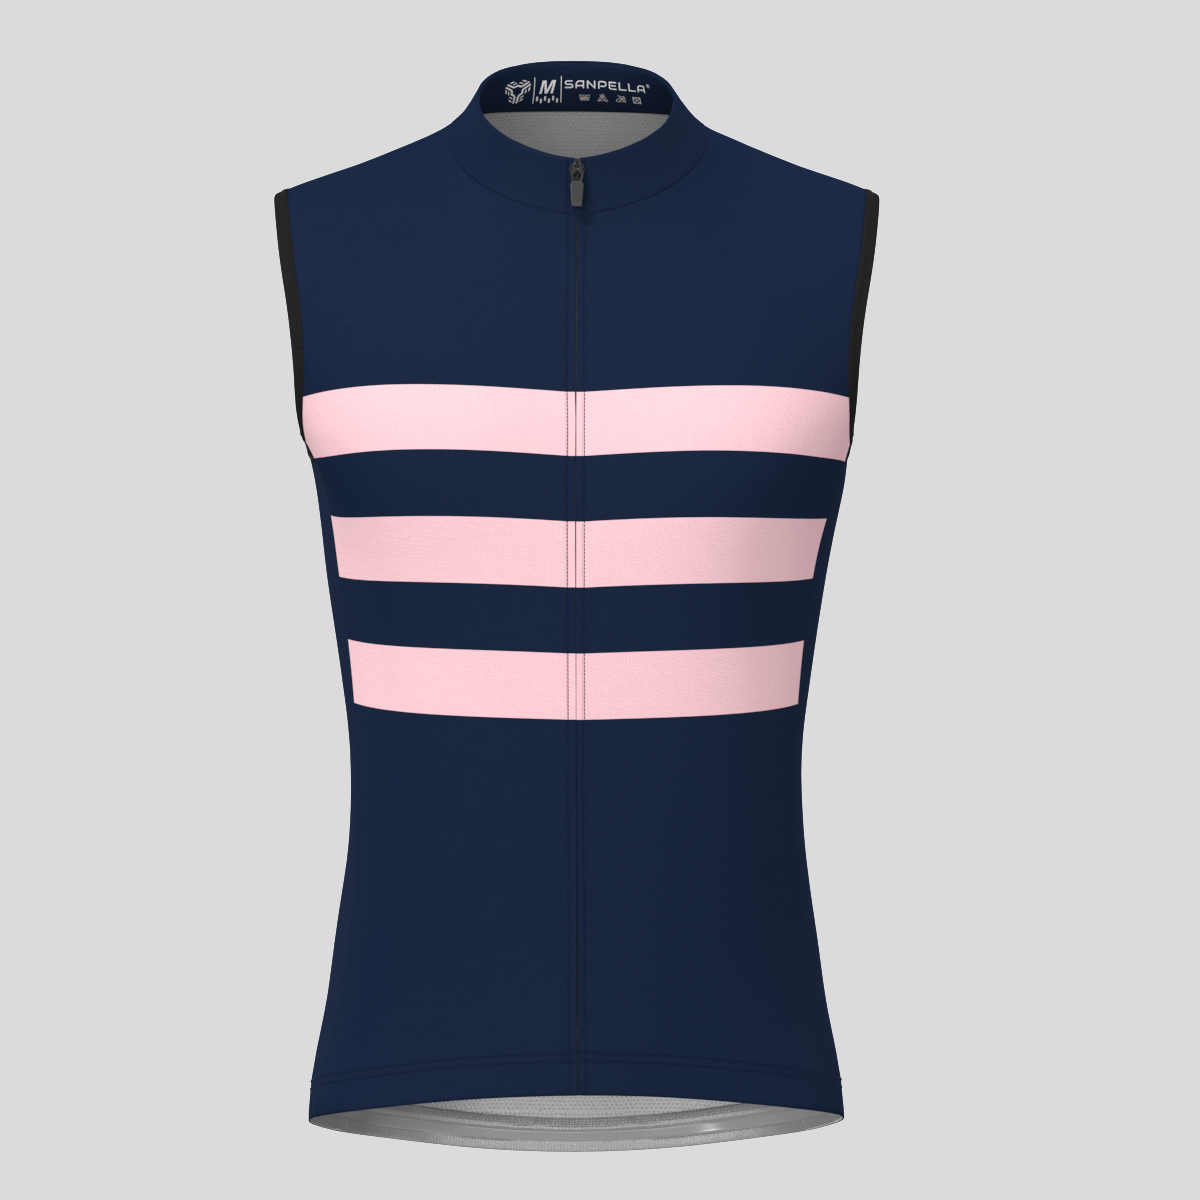 Minimal Stripes Men's Sleeveless Cycling Jersey - Navy/Pink